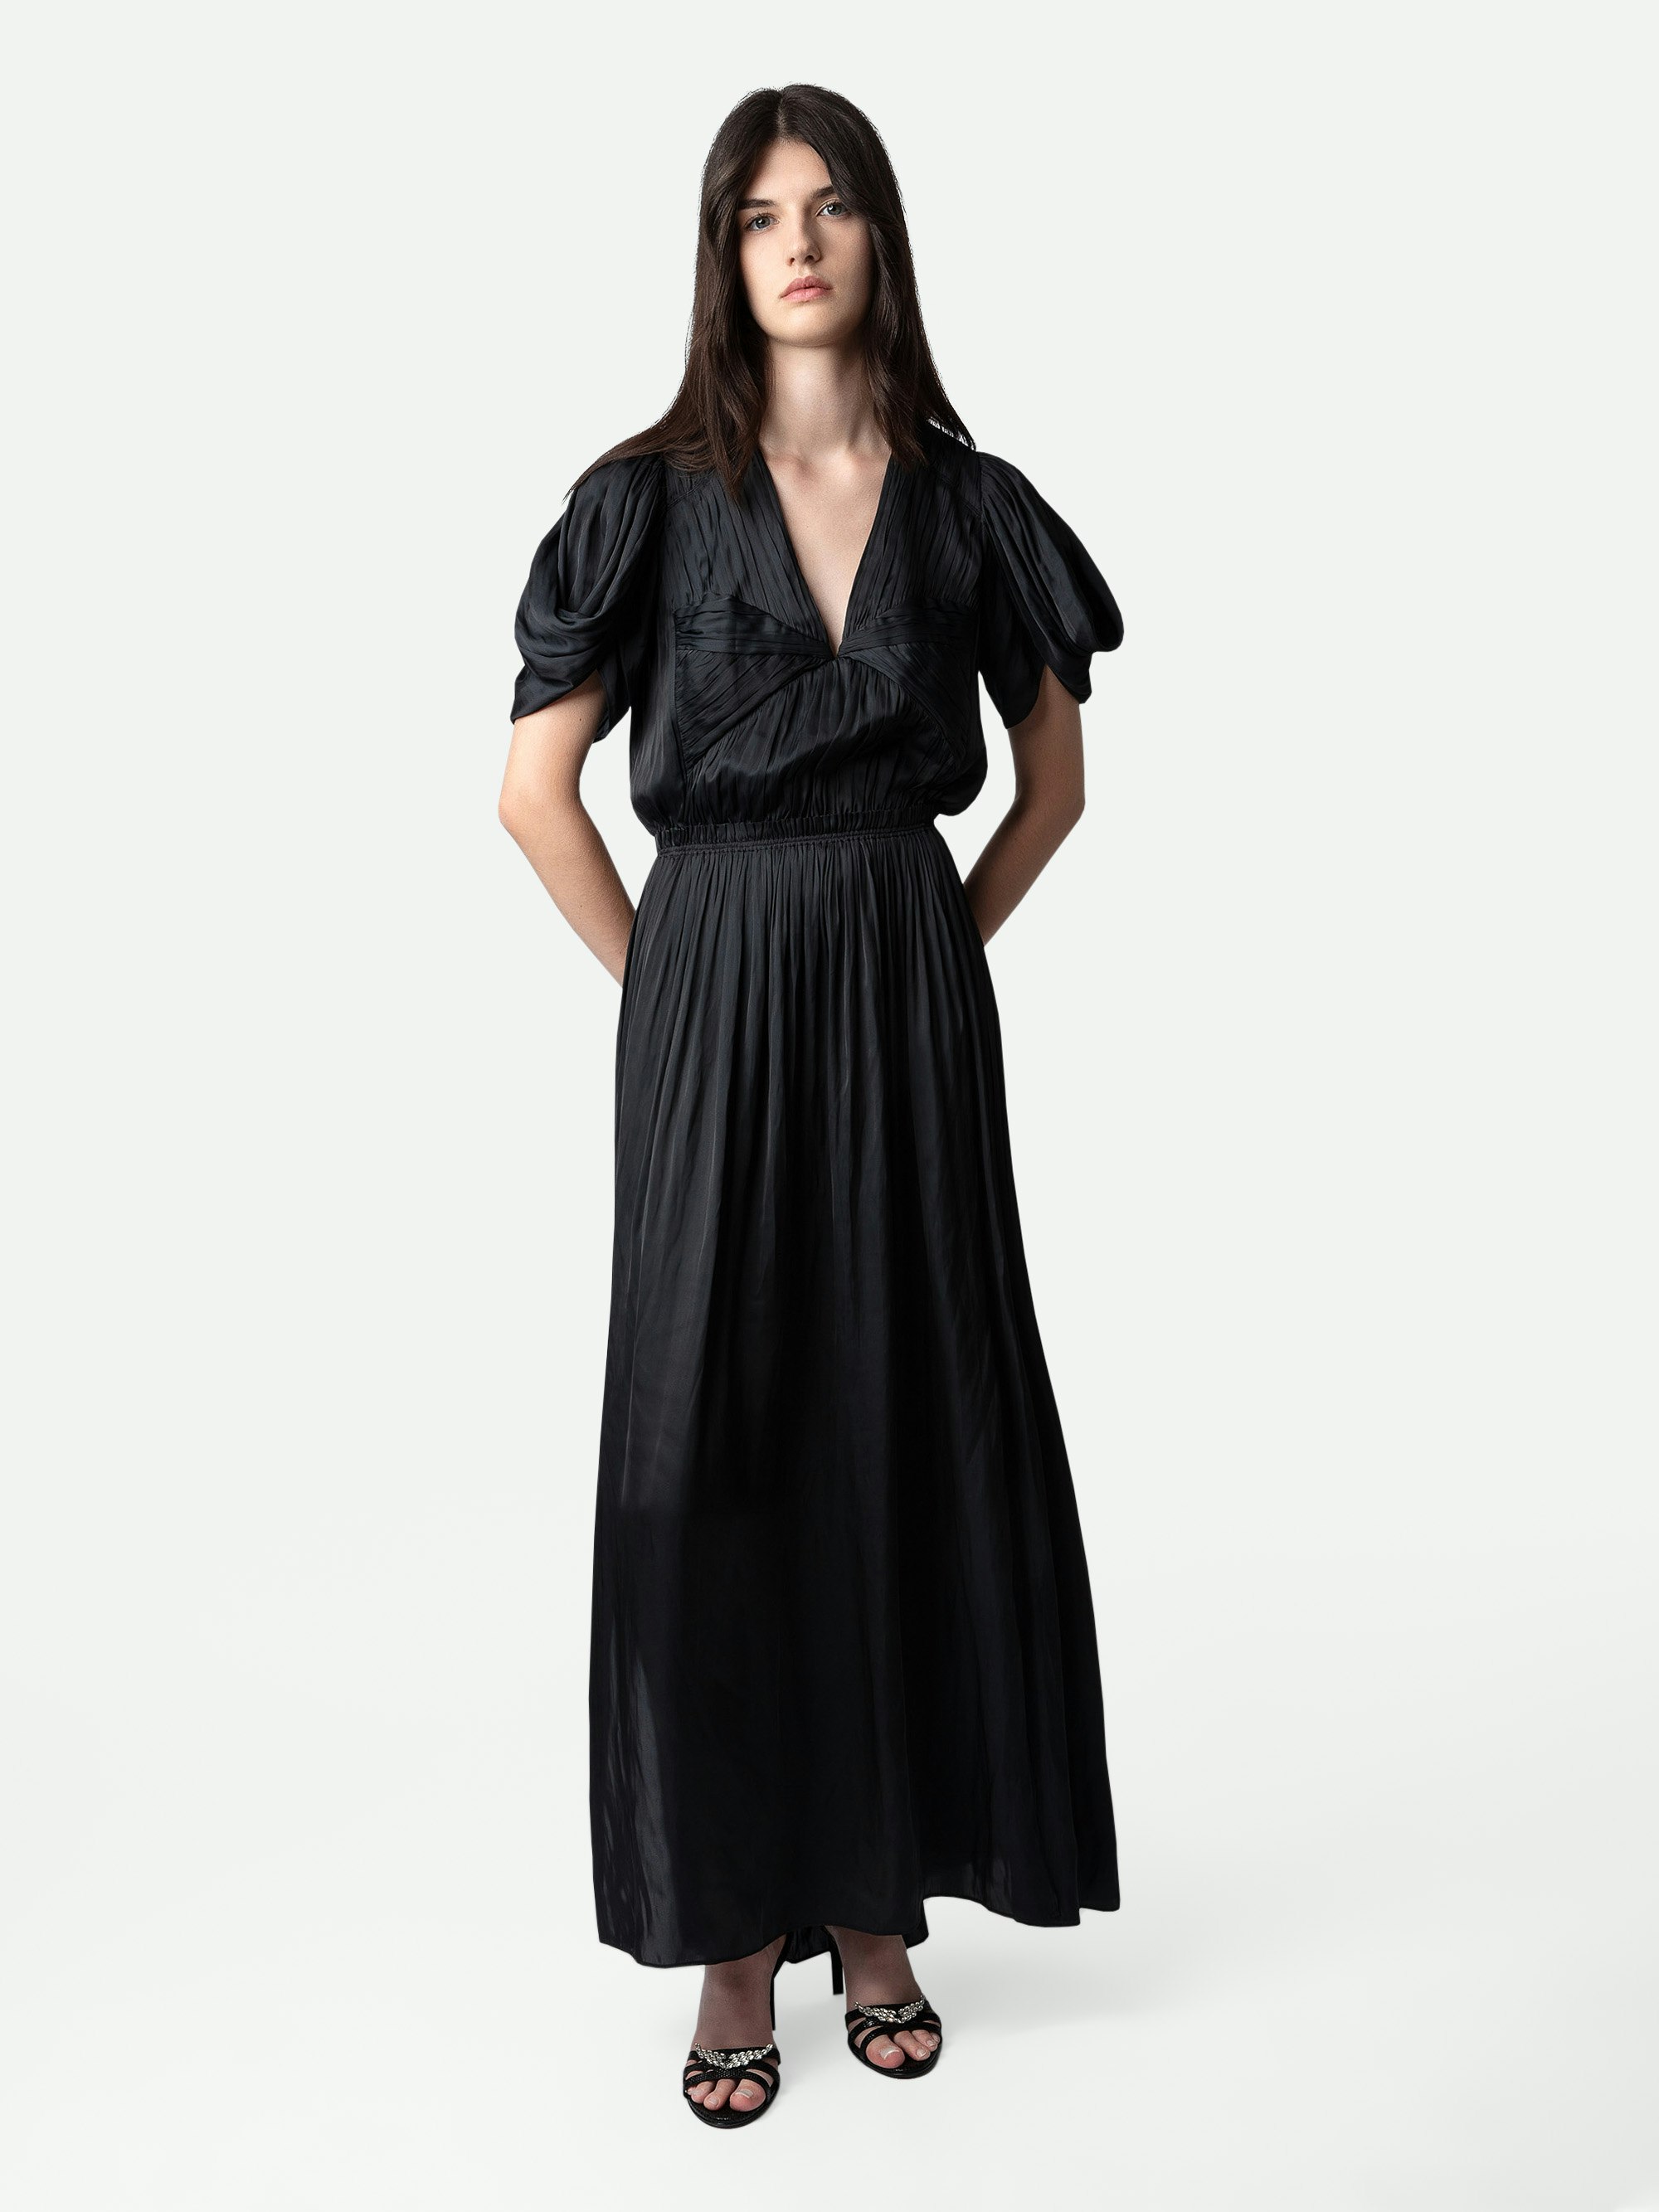 Reina Satin Dress - Women’s long gathered and draped black satin dress with short puff sleeves.